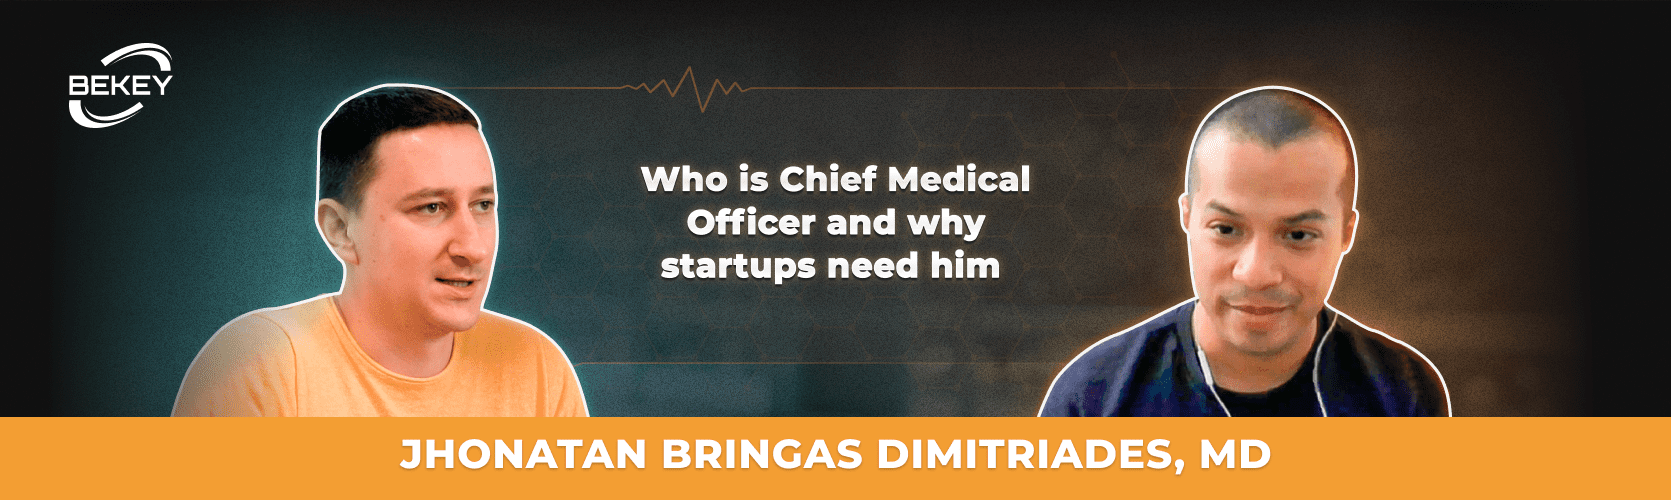 Jhonatan Bringas Dimitriades - digital health interview